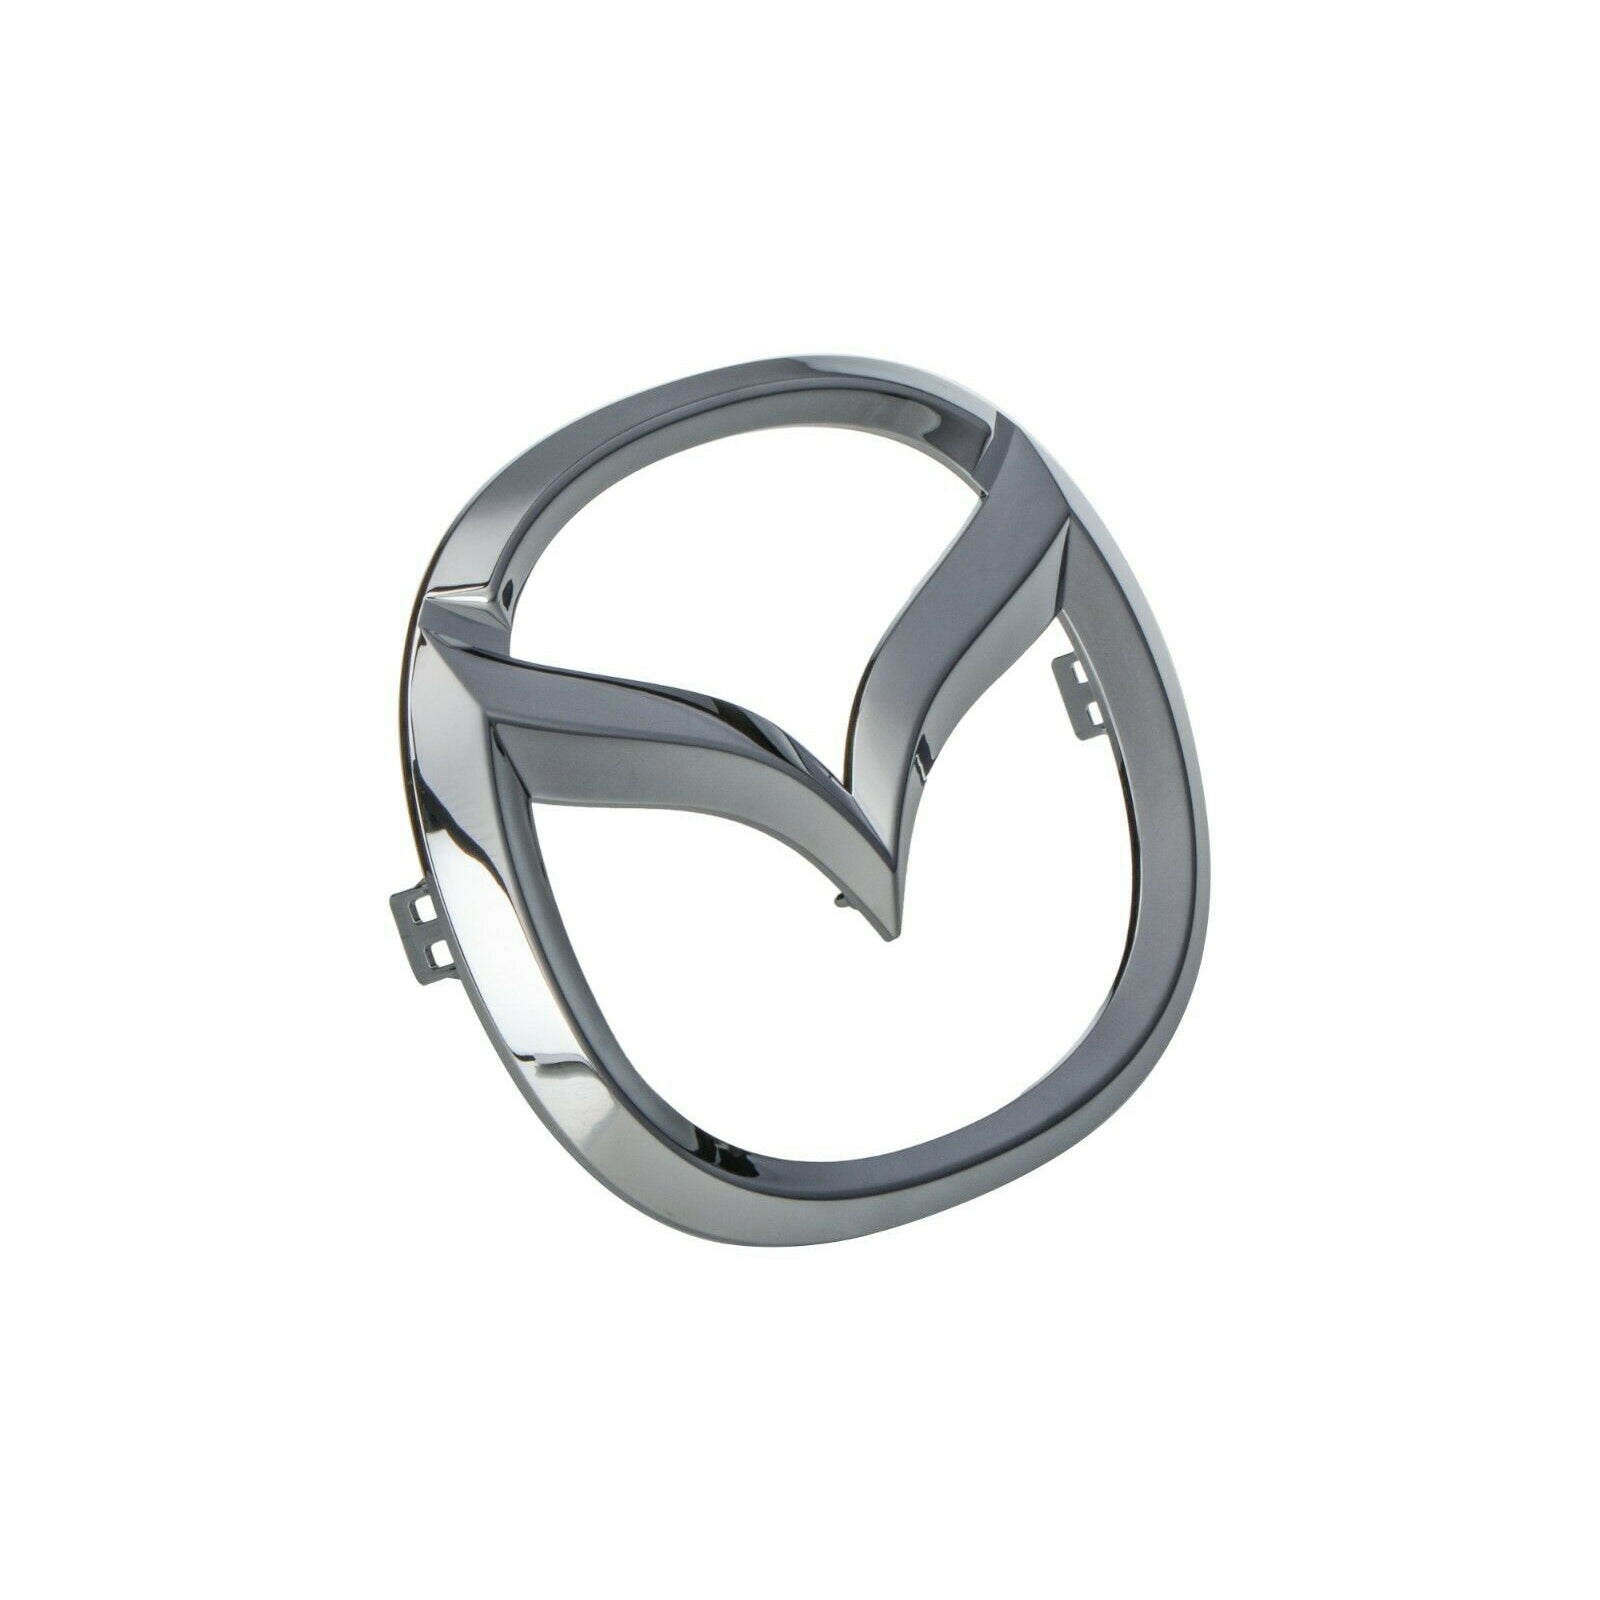 Mazda3 Emblems, Badging | Mazda3 Hatchback, Mazdaspeed3 (2004-2009)